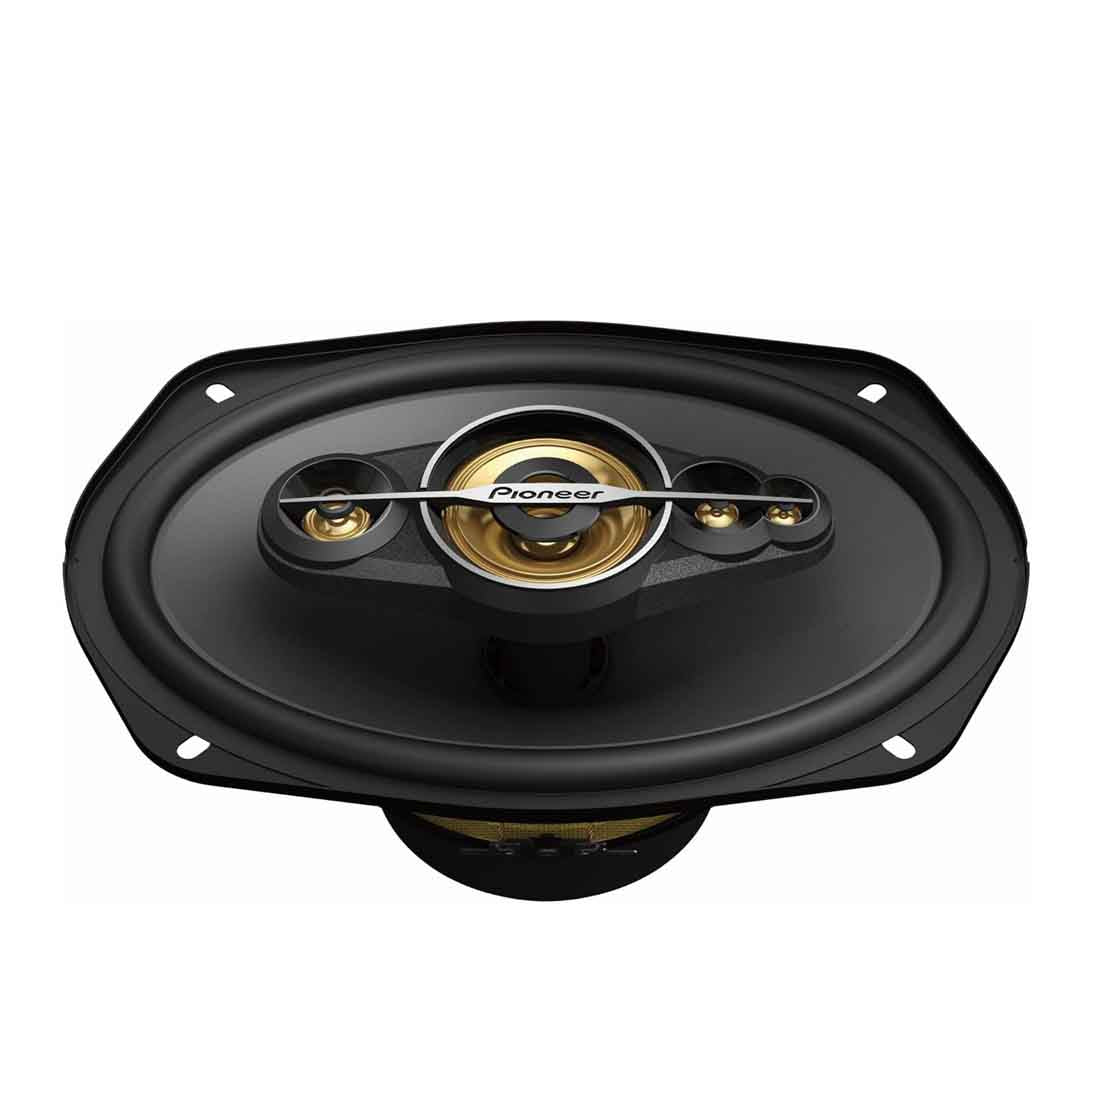 Pioneer TS-A6991F 6" x 9" 5-Way 700W Max Power 4-Ohms Car Audio Coaxial Speakers